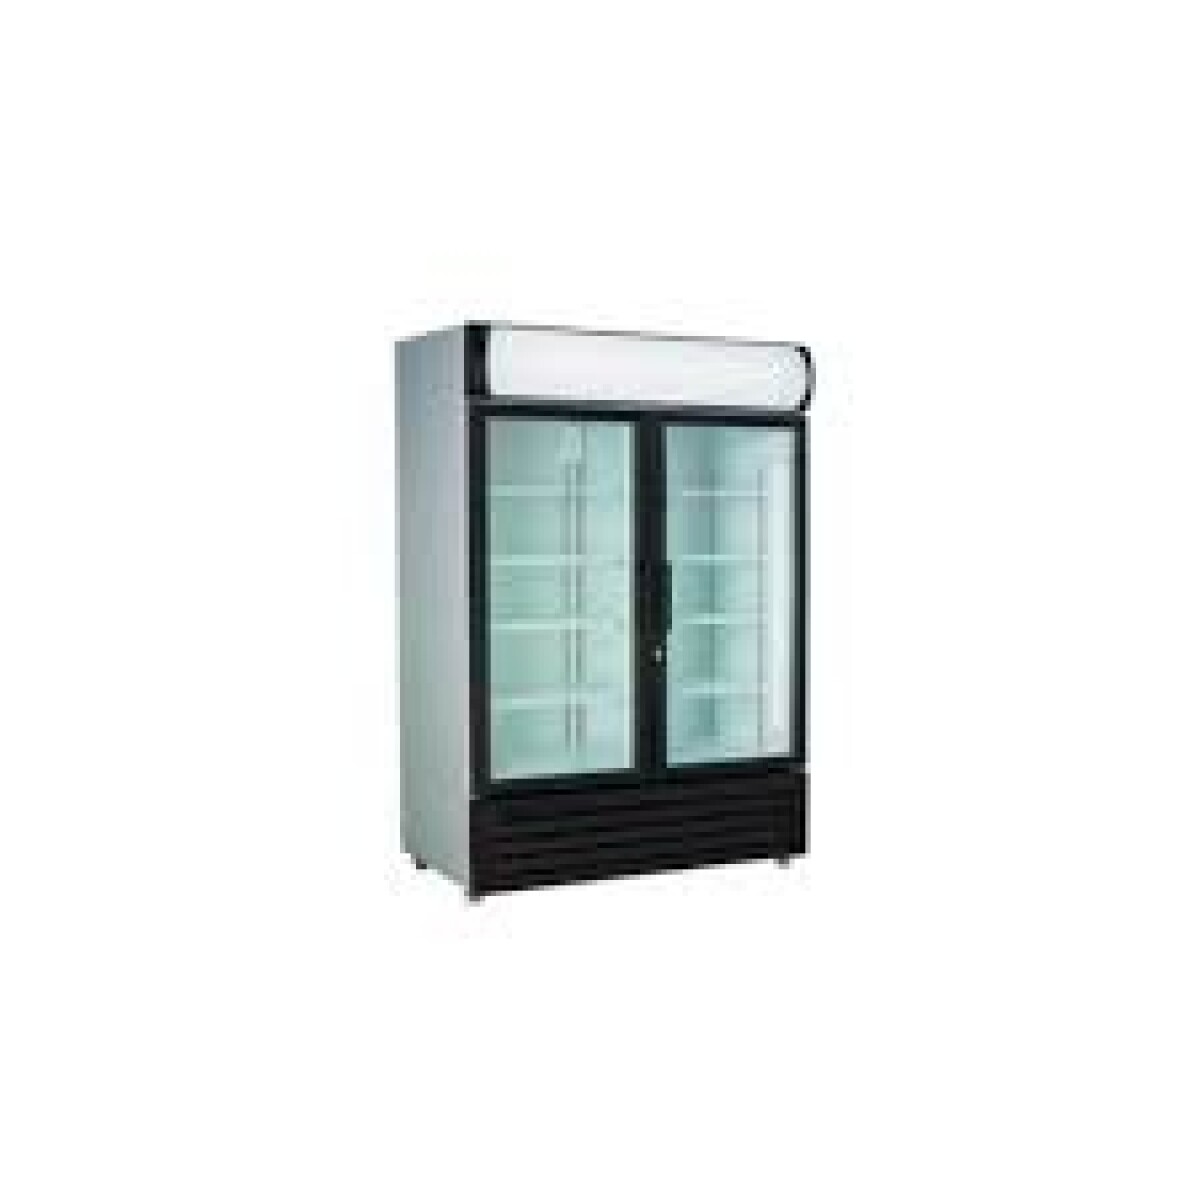 Expositor vertical refrigerado 2 puerta 800 lts Iccold 